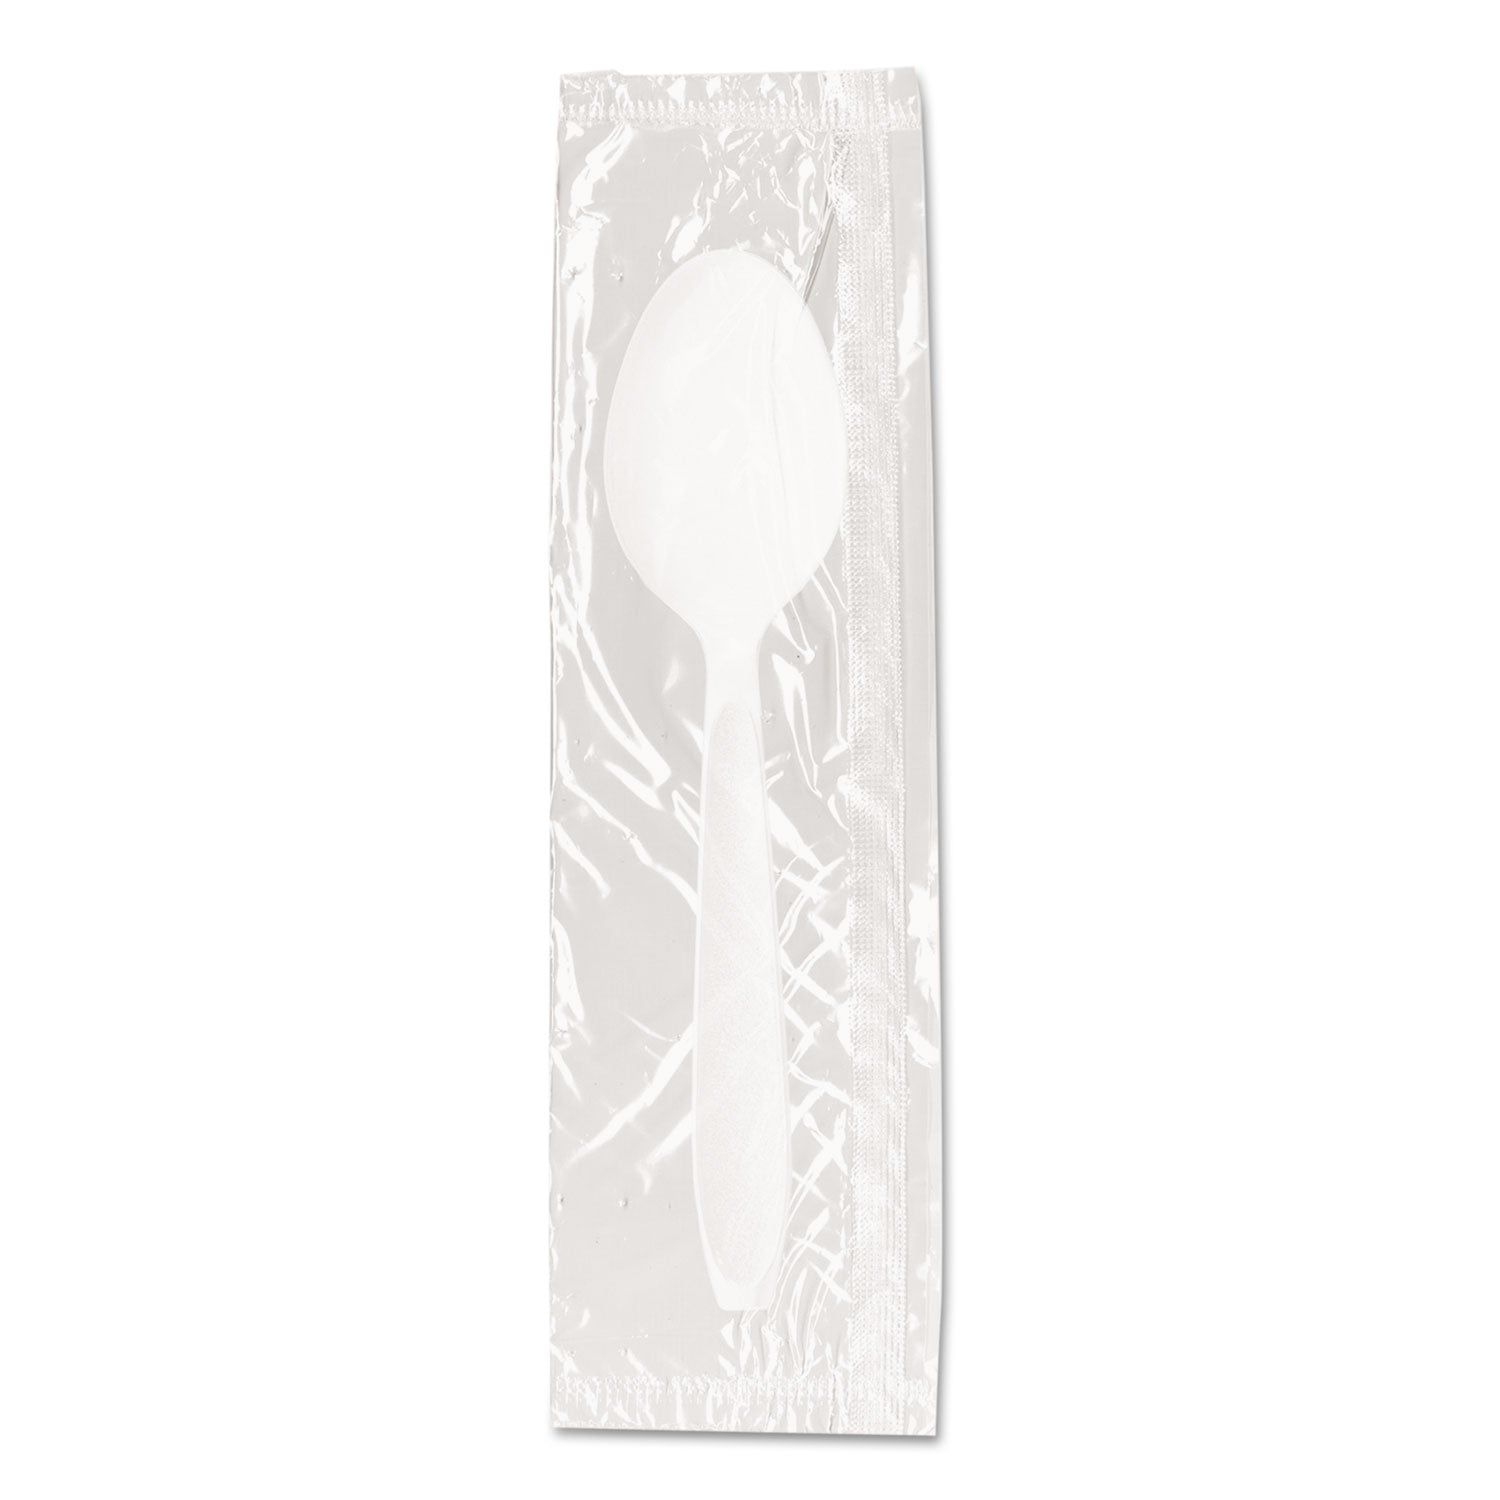 reliance-mediumweight-cutlery-teaspoon-individually-wrapped-white-1000-carton_sccrsw3 - 1